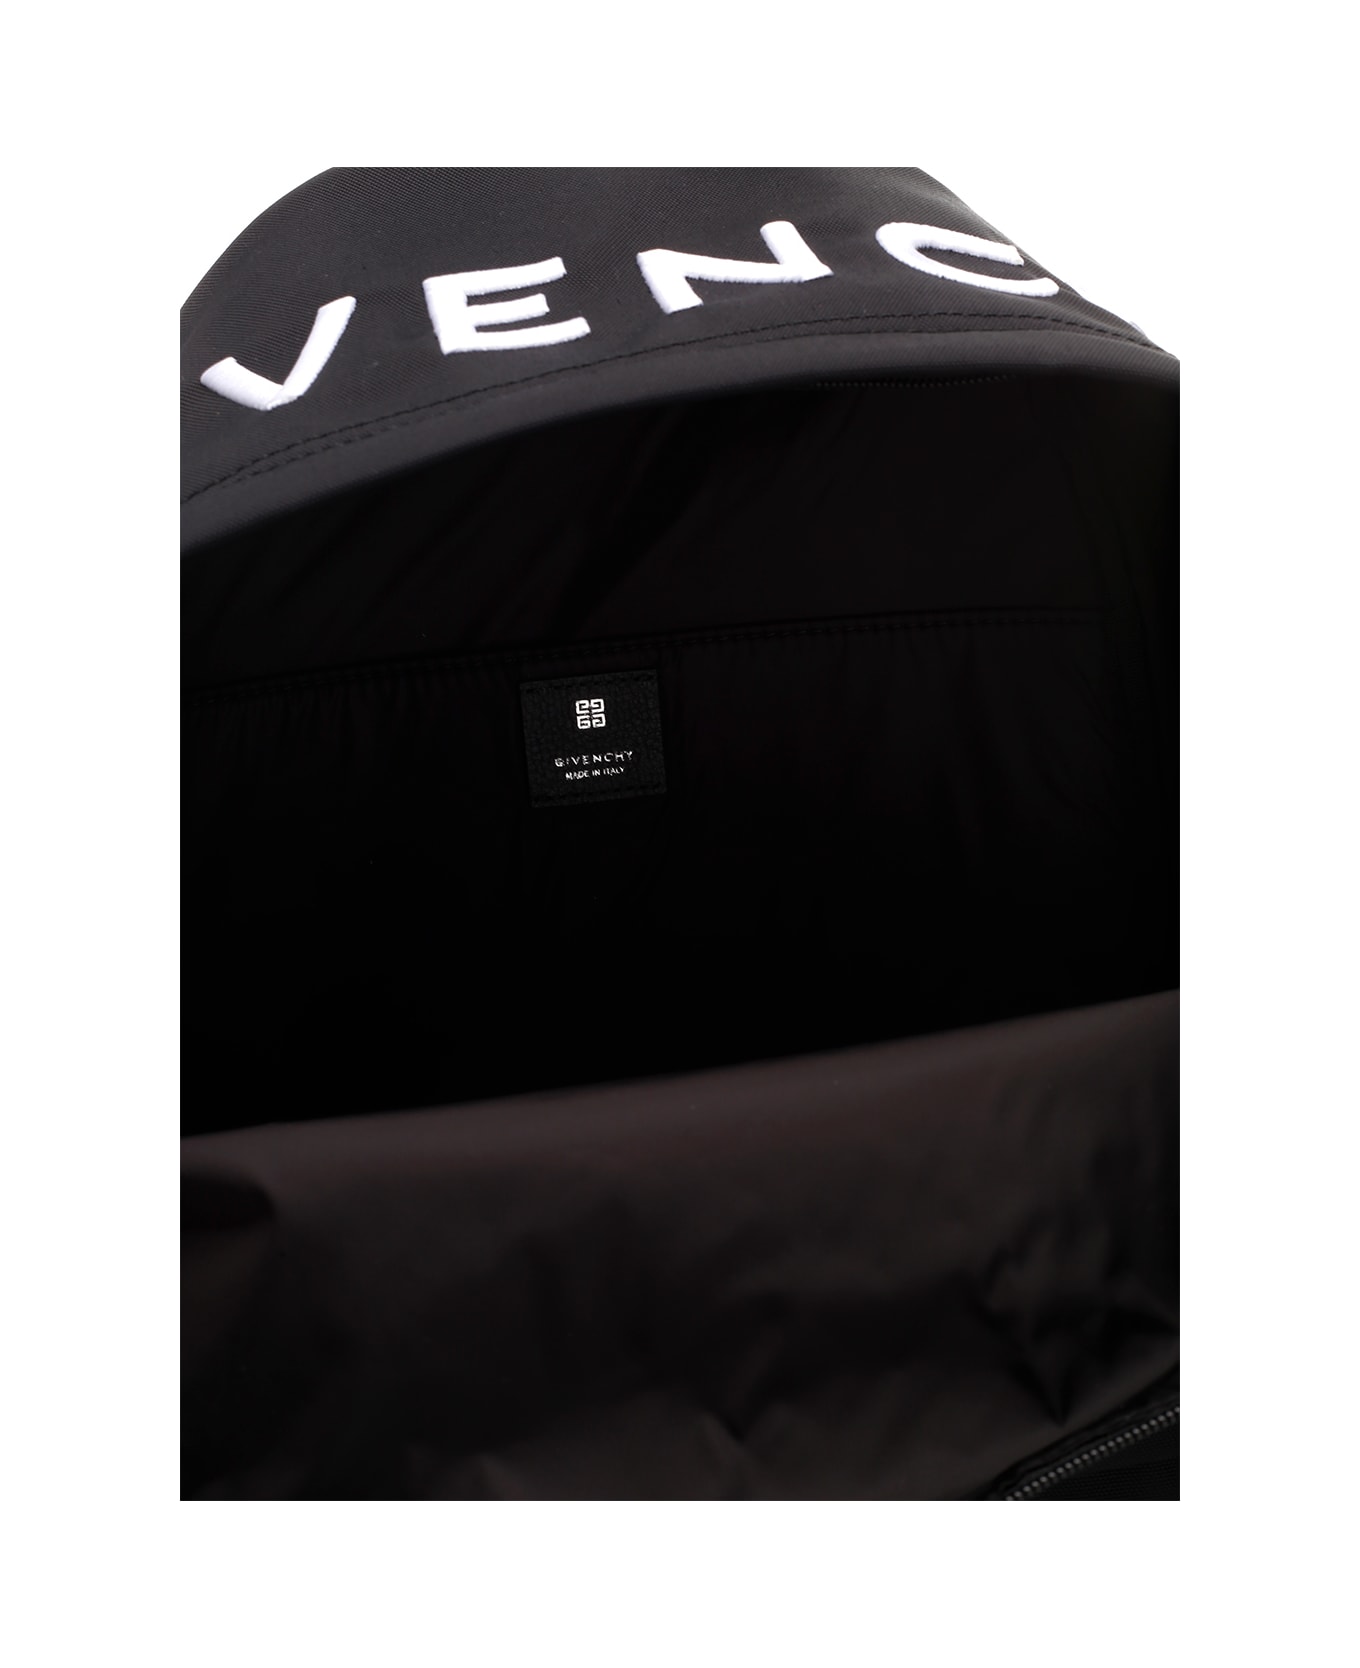 Givenchy 'essential U' Backpack - Black